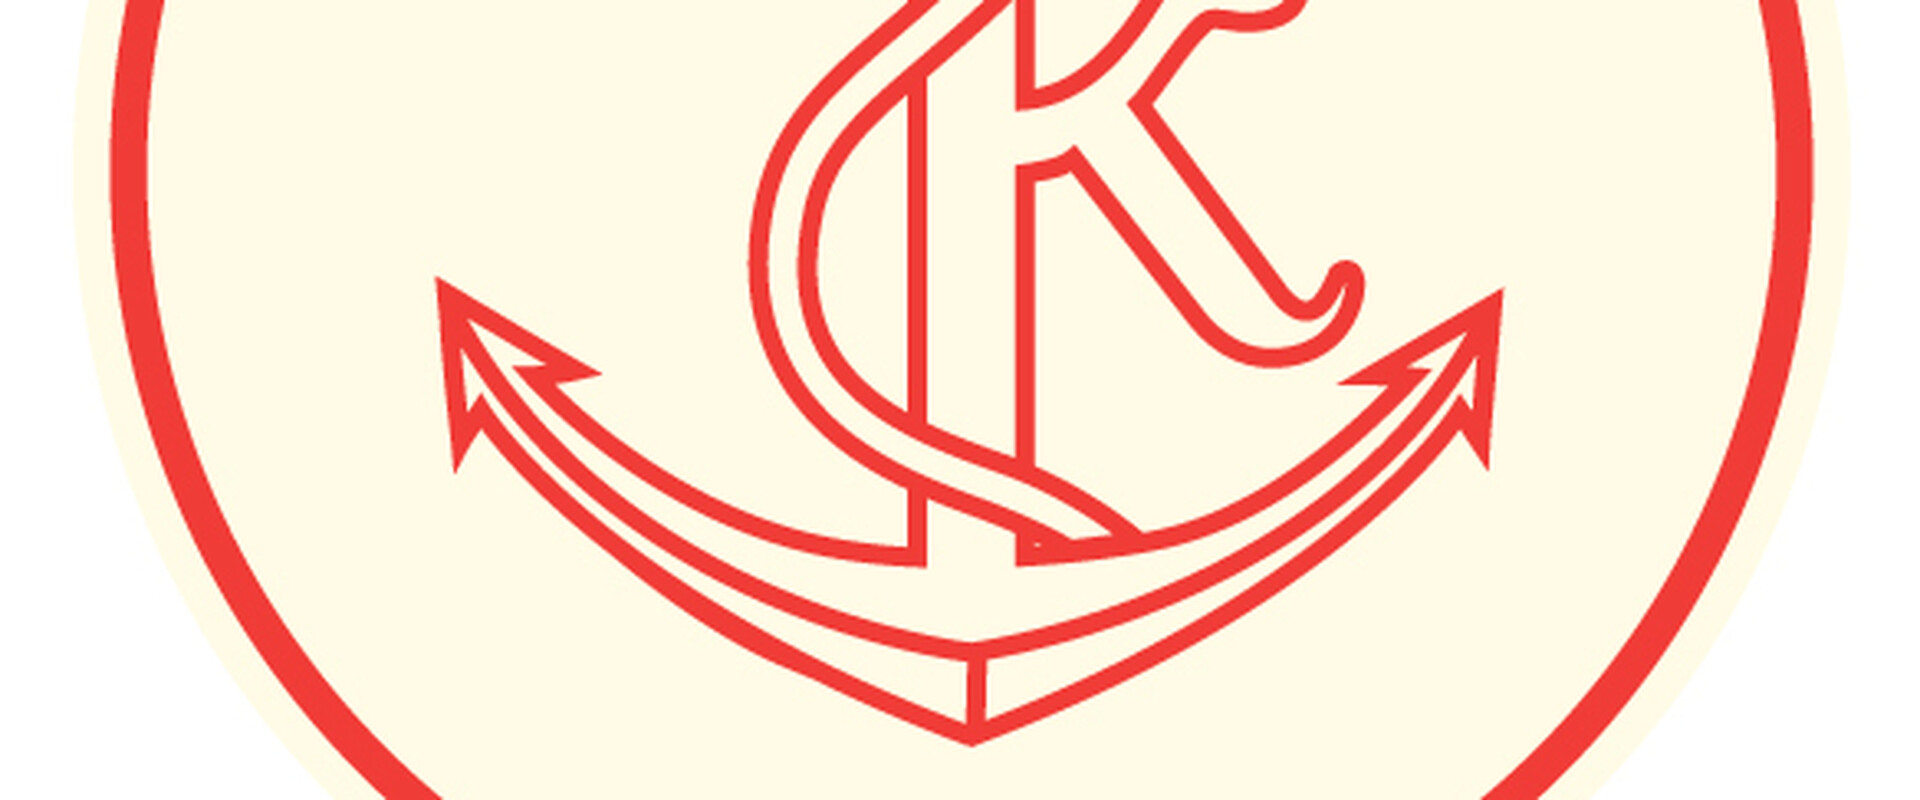 Kristiinankaupunki logo pun nega rgb3